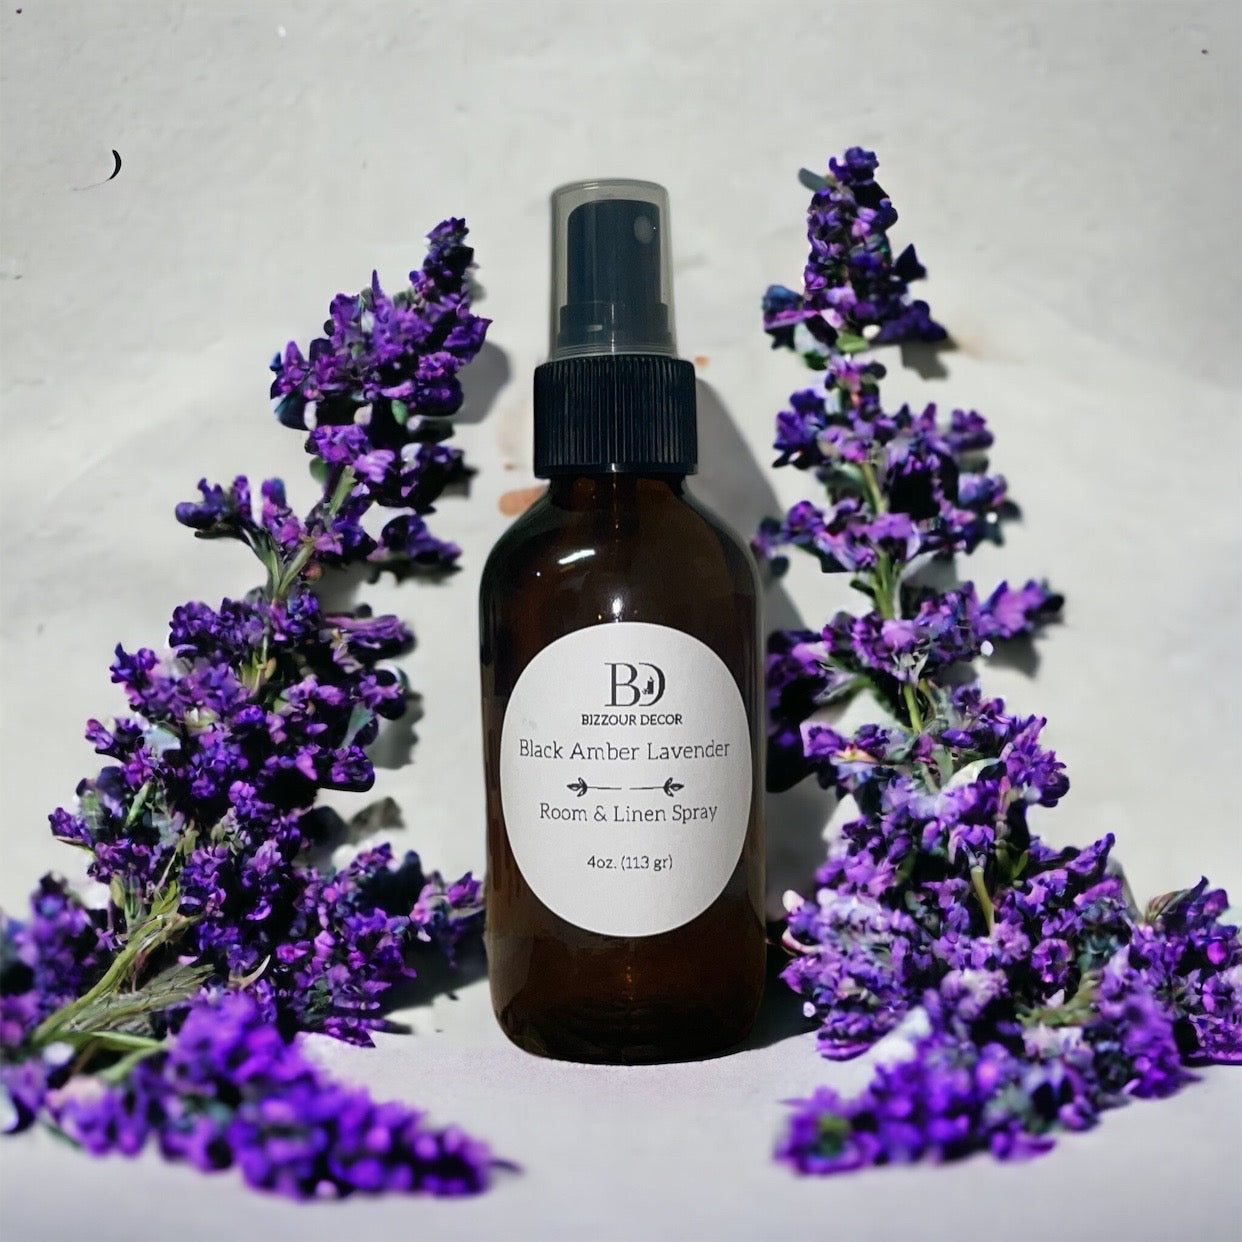 Black Amber Lavender room spray